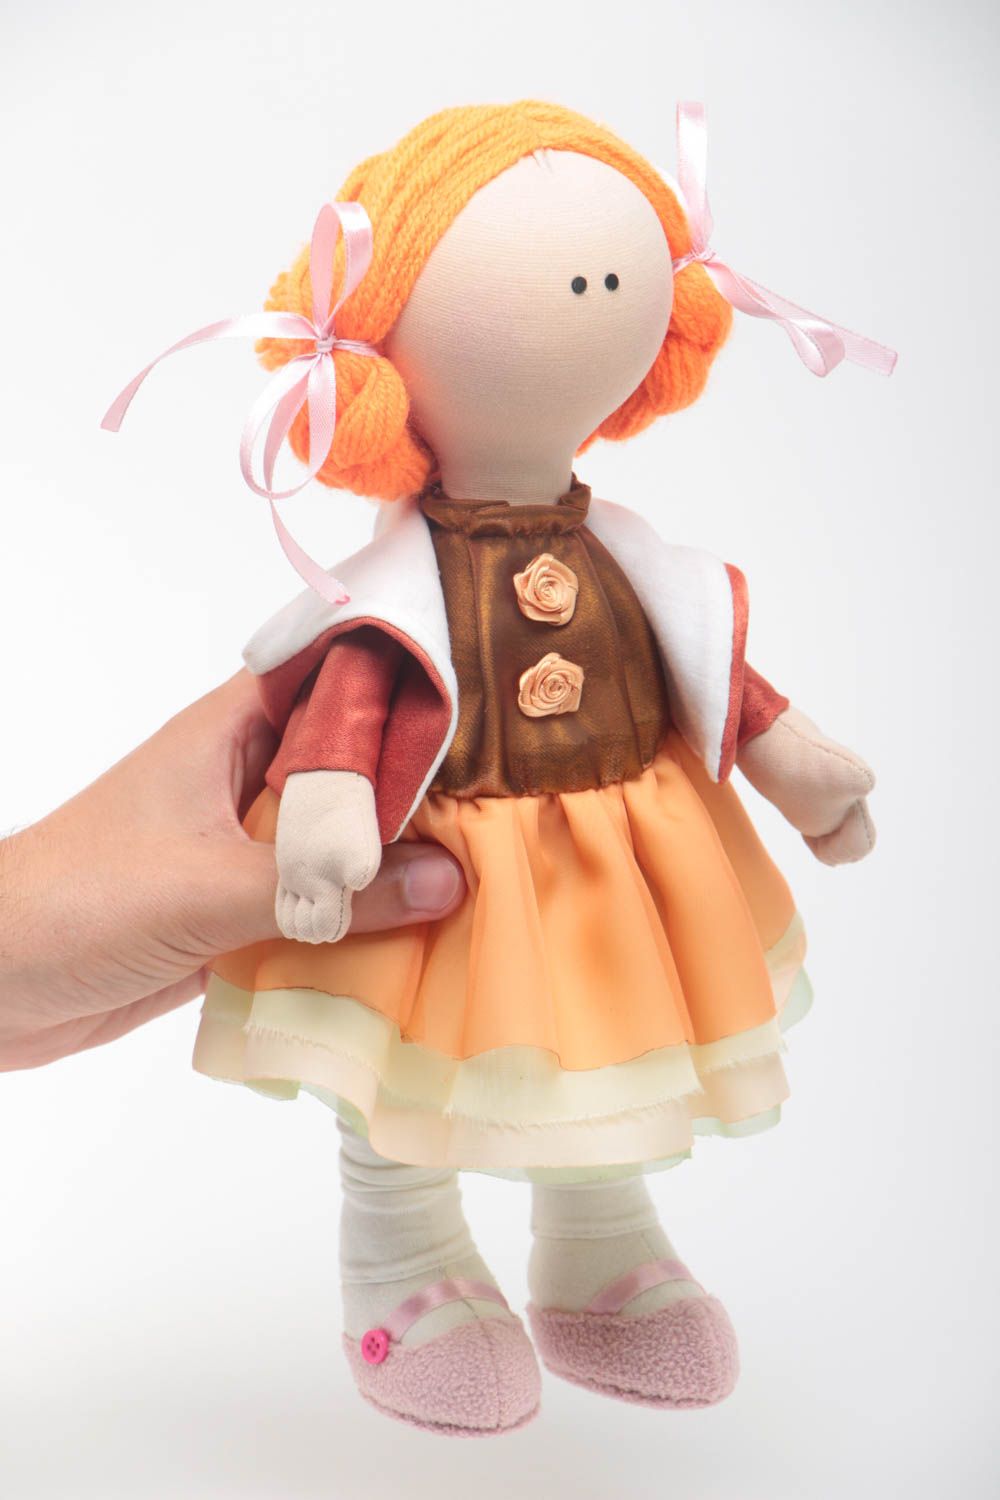 Handmade doll designer toy unusual gift for children gift ideas interior decor photo 5